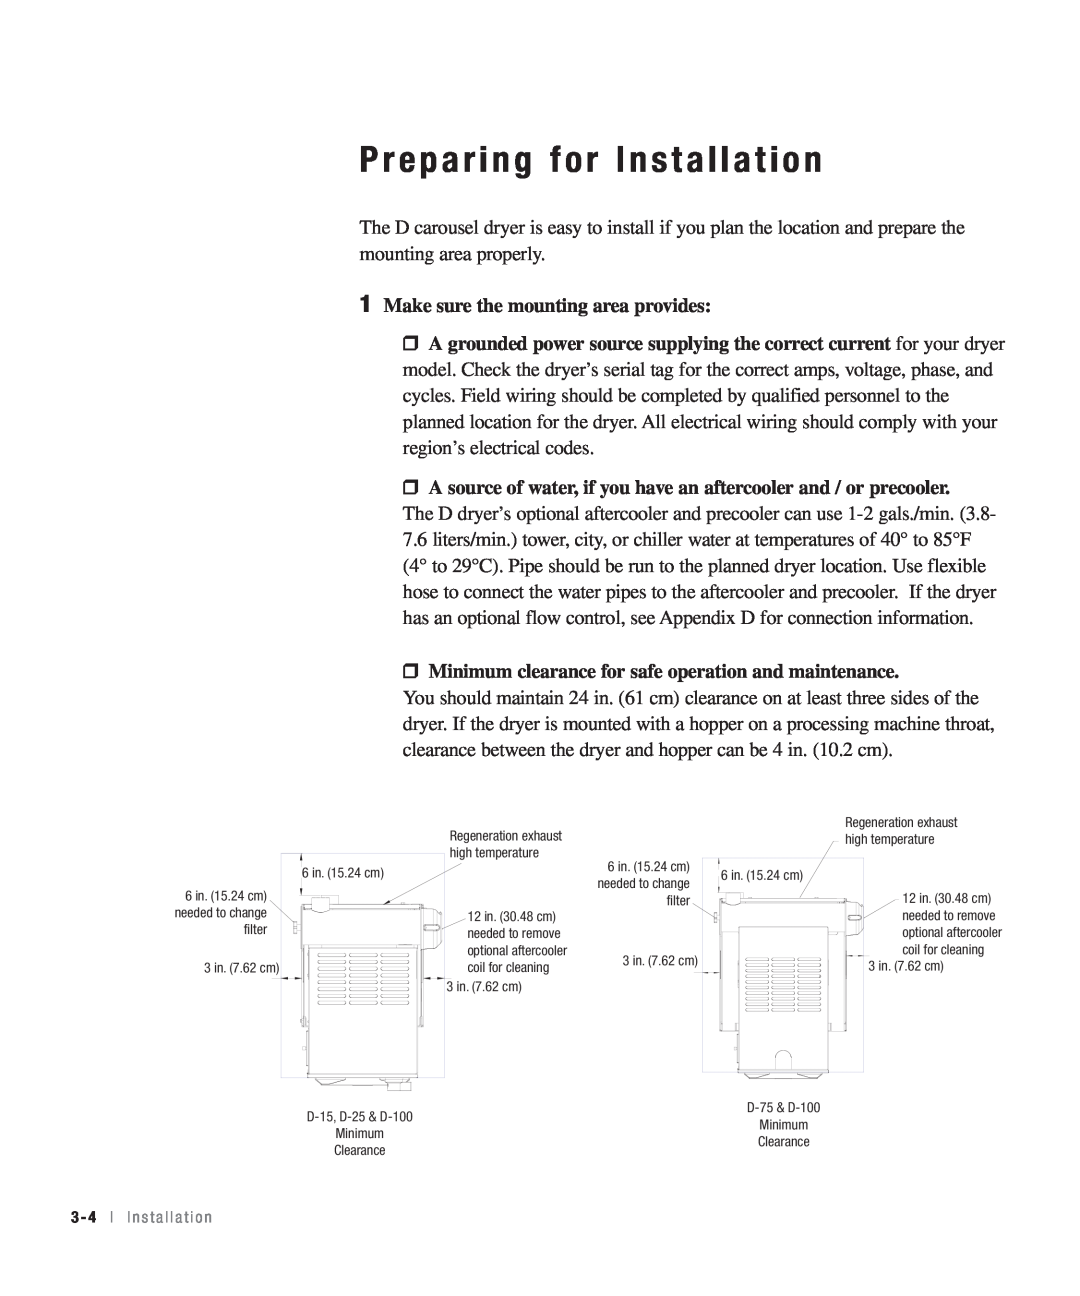 Conair 50, 25, 15, 100 specifications Preparing for Installation 